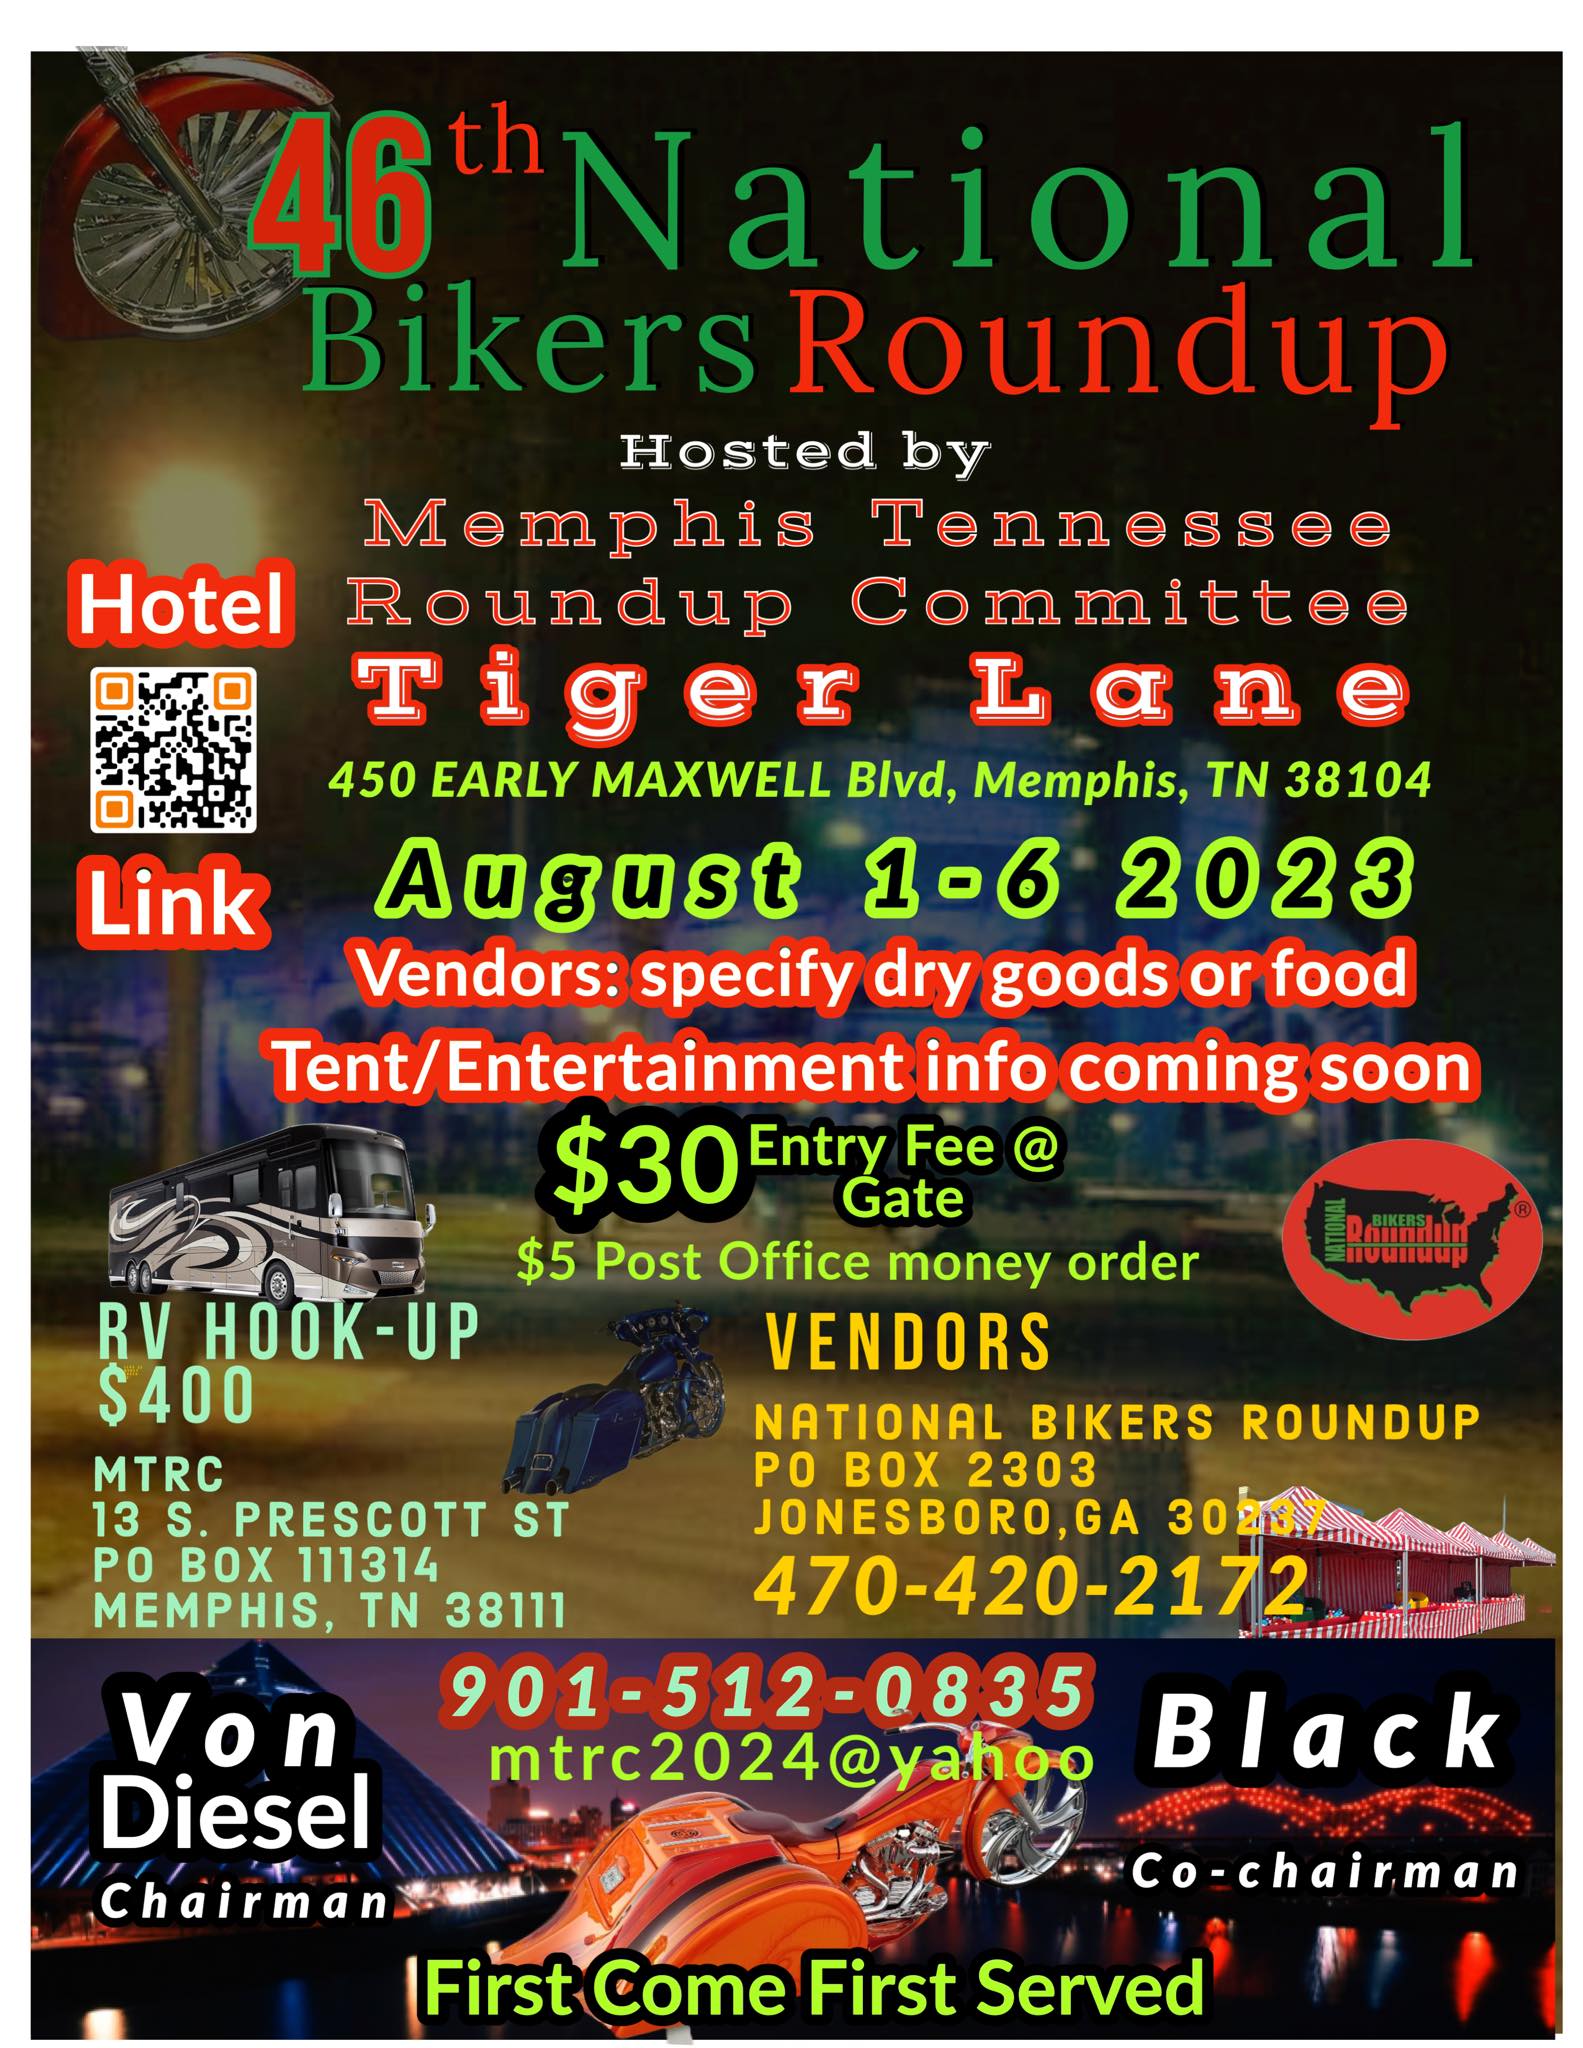 National Bikers Roundup Memphis 2023 Poster